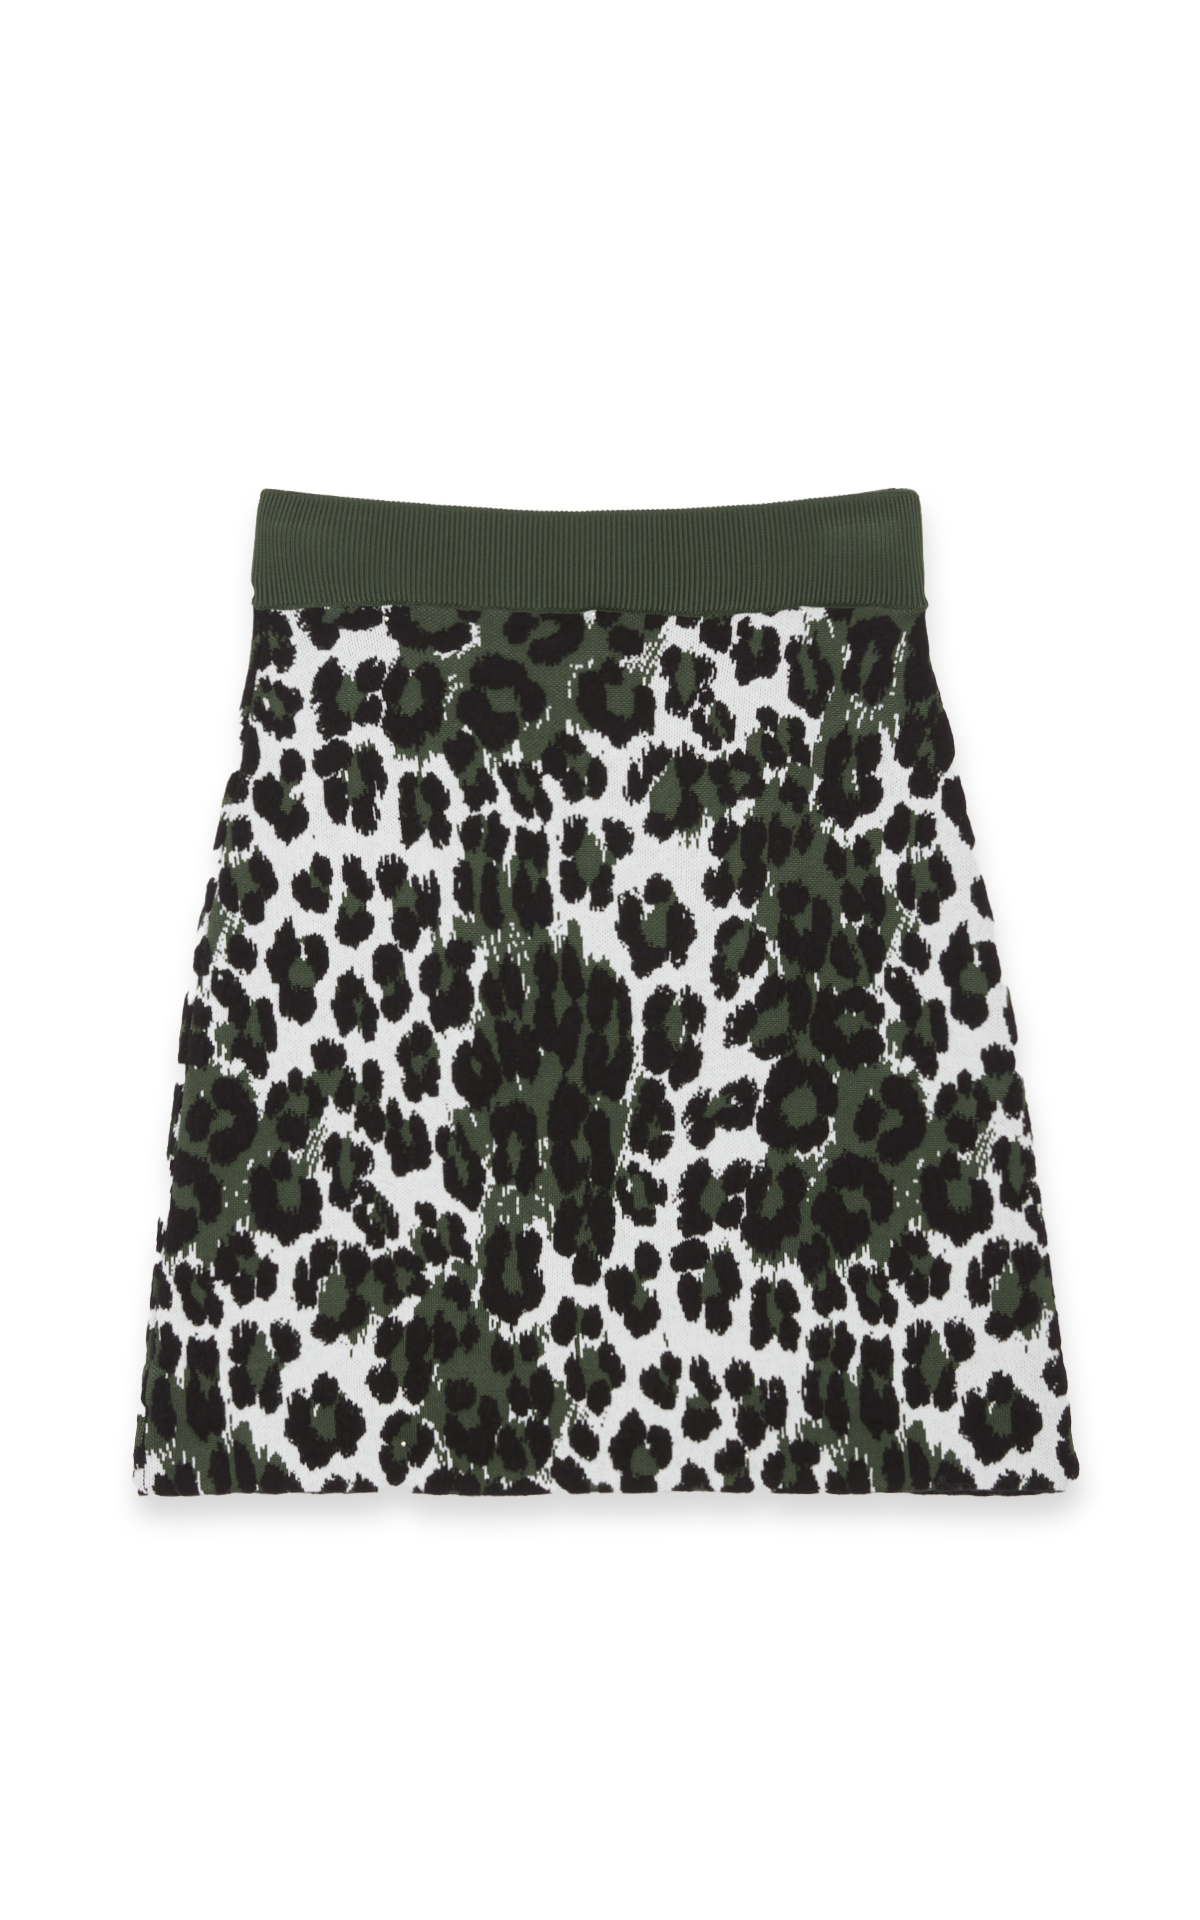 Green leopard print knitted skirt